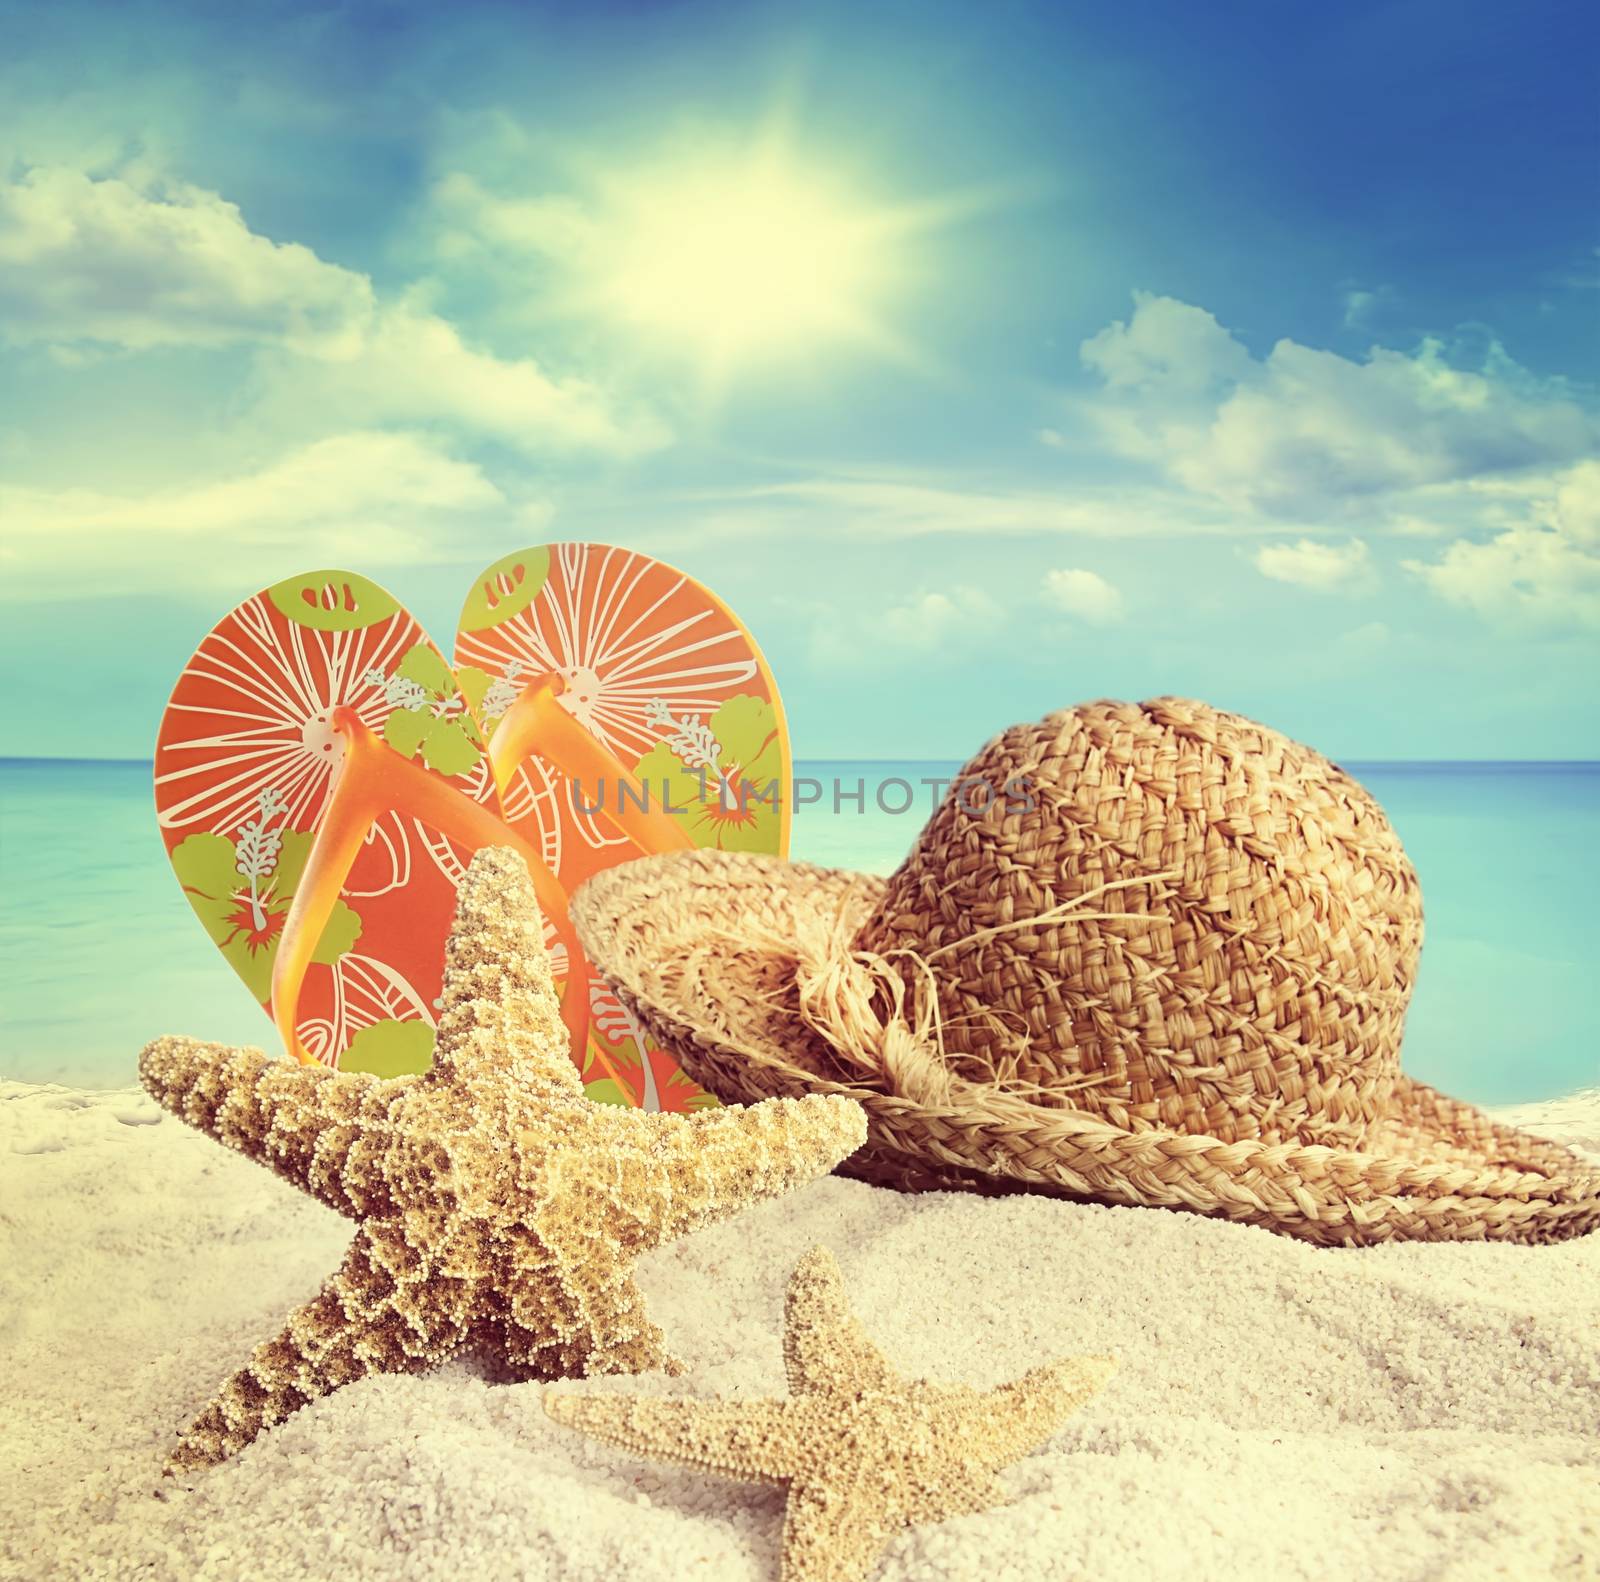 Sandy beach, straw hat and starfish in summer